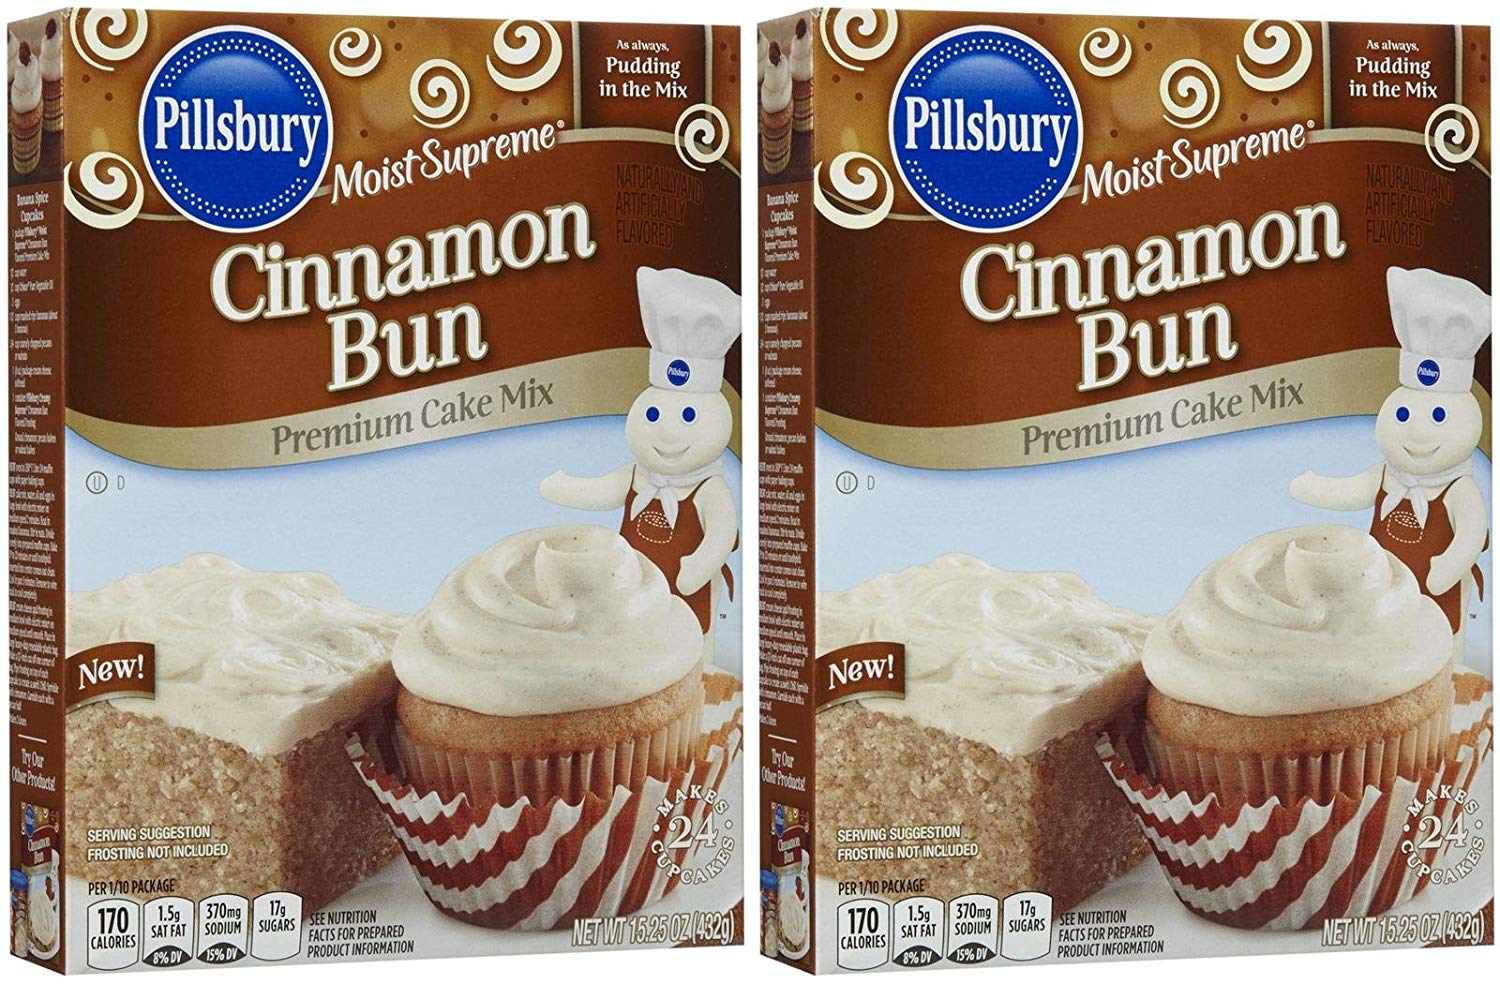 Pillsbury Moist Supreme Premium Cake Mix-Cinnamon Bun